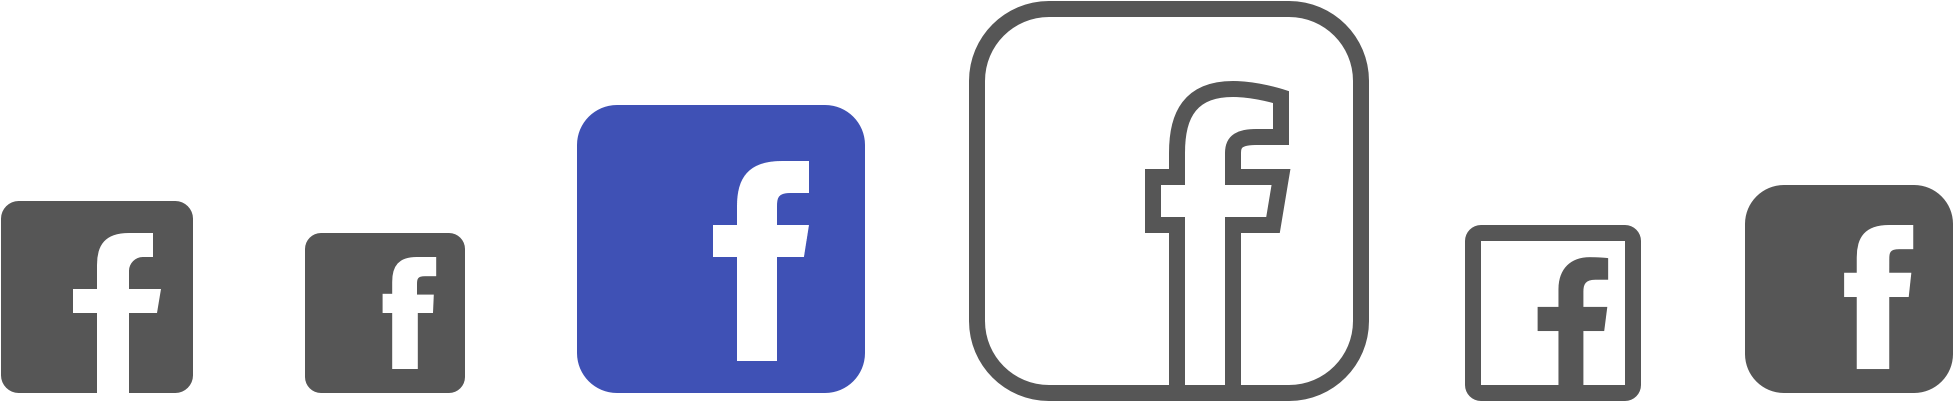 Facebook Icons - Simple Facebook Logo (2368x608)